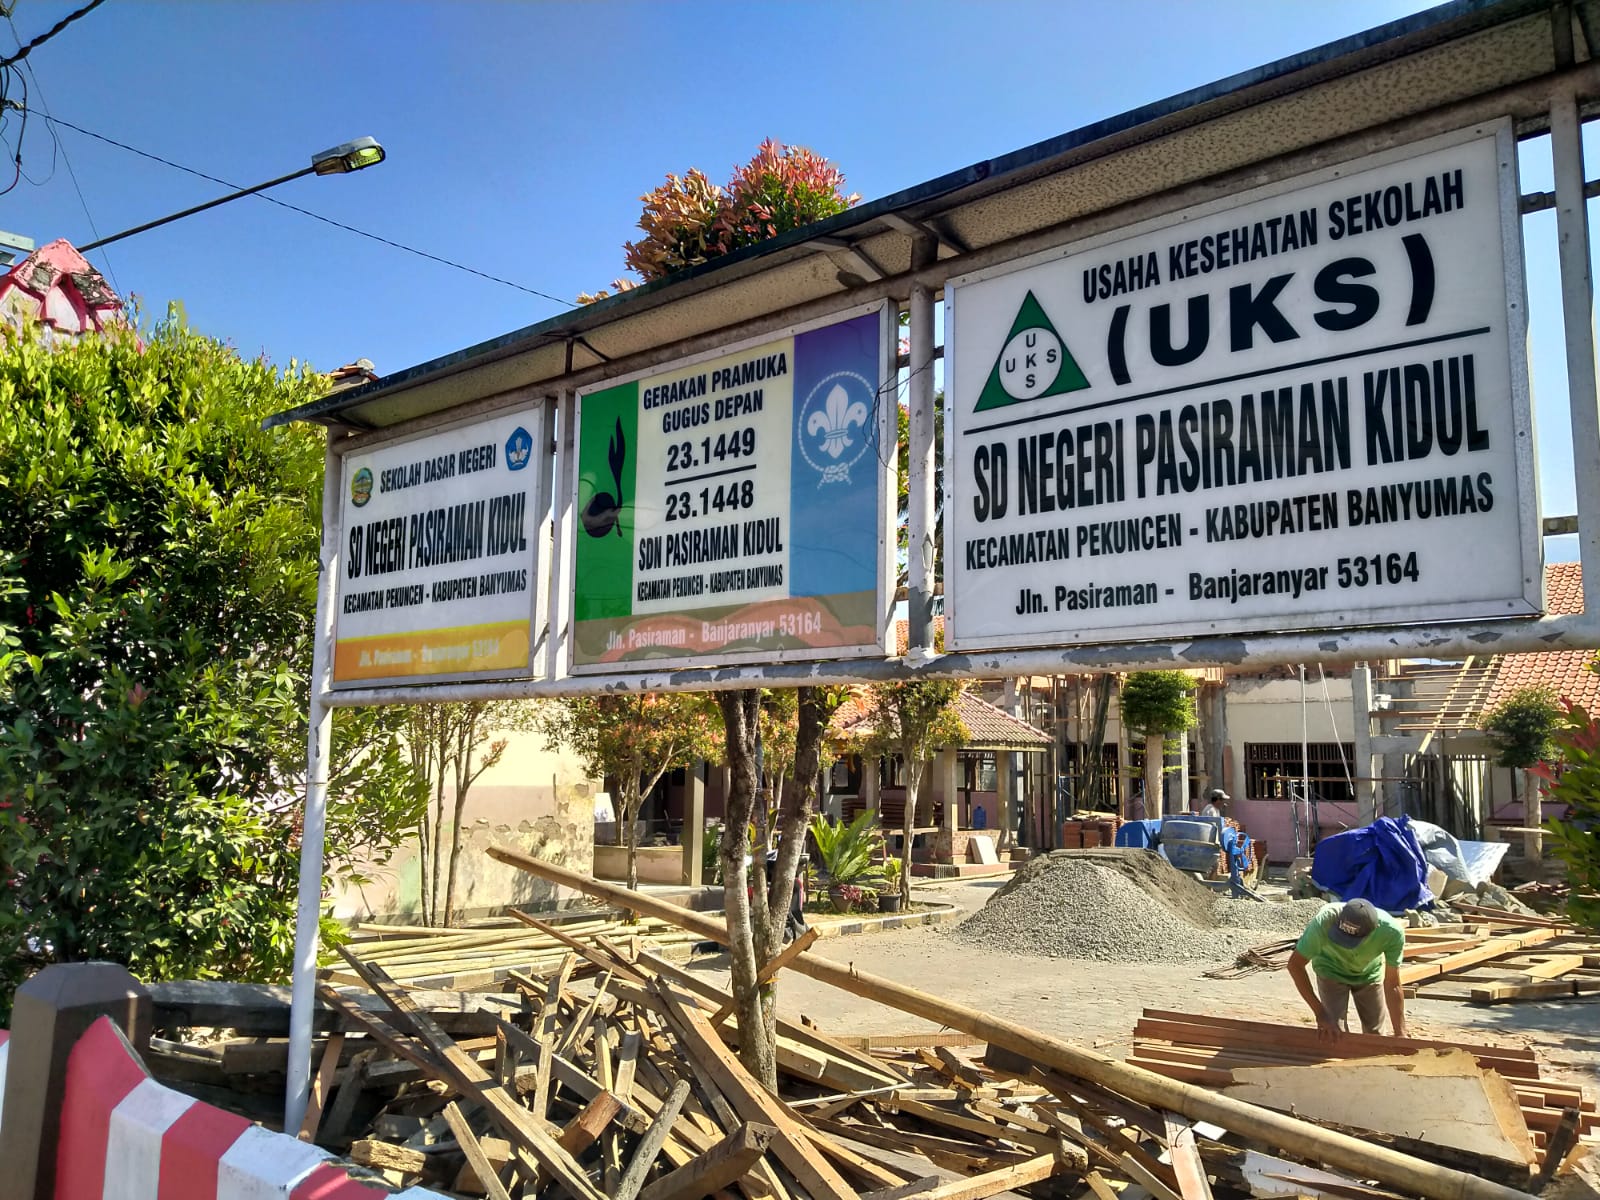 SD Negeri Pasiraman Kidul Terima DAK Rp 1,2 Miliar untuk Tuntaskan Pembangunan